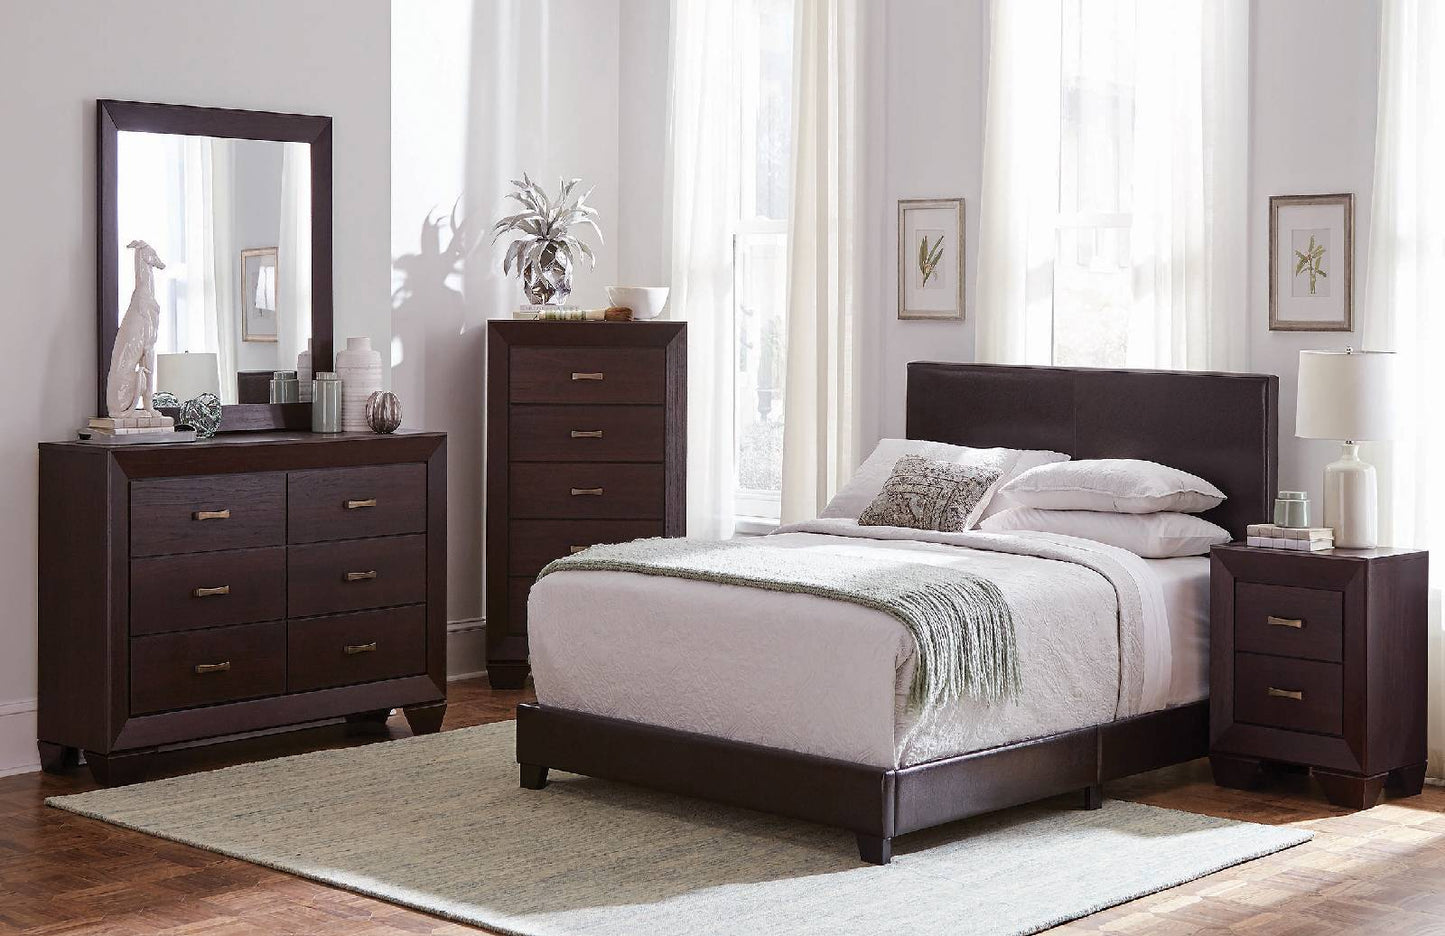 Dorian Upholstered Bedroom Set Brown - 300762